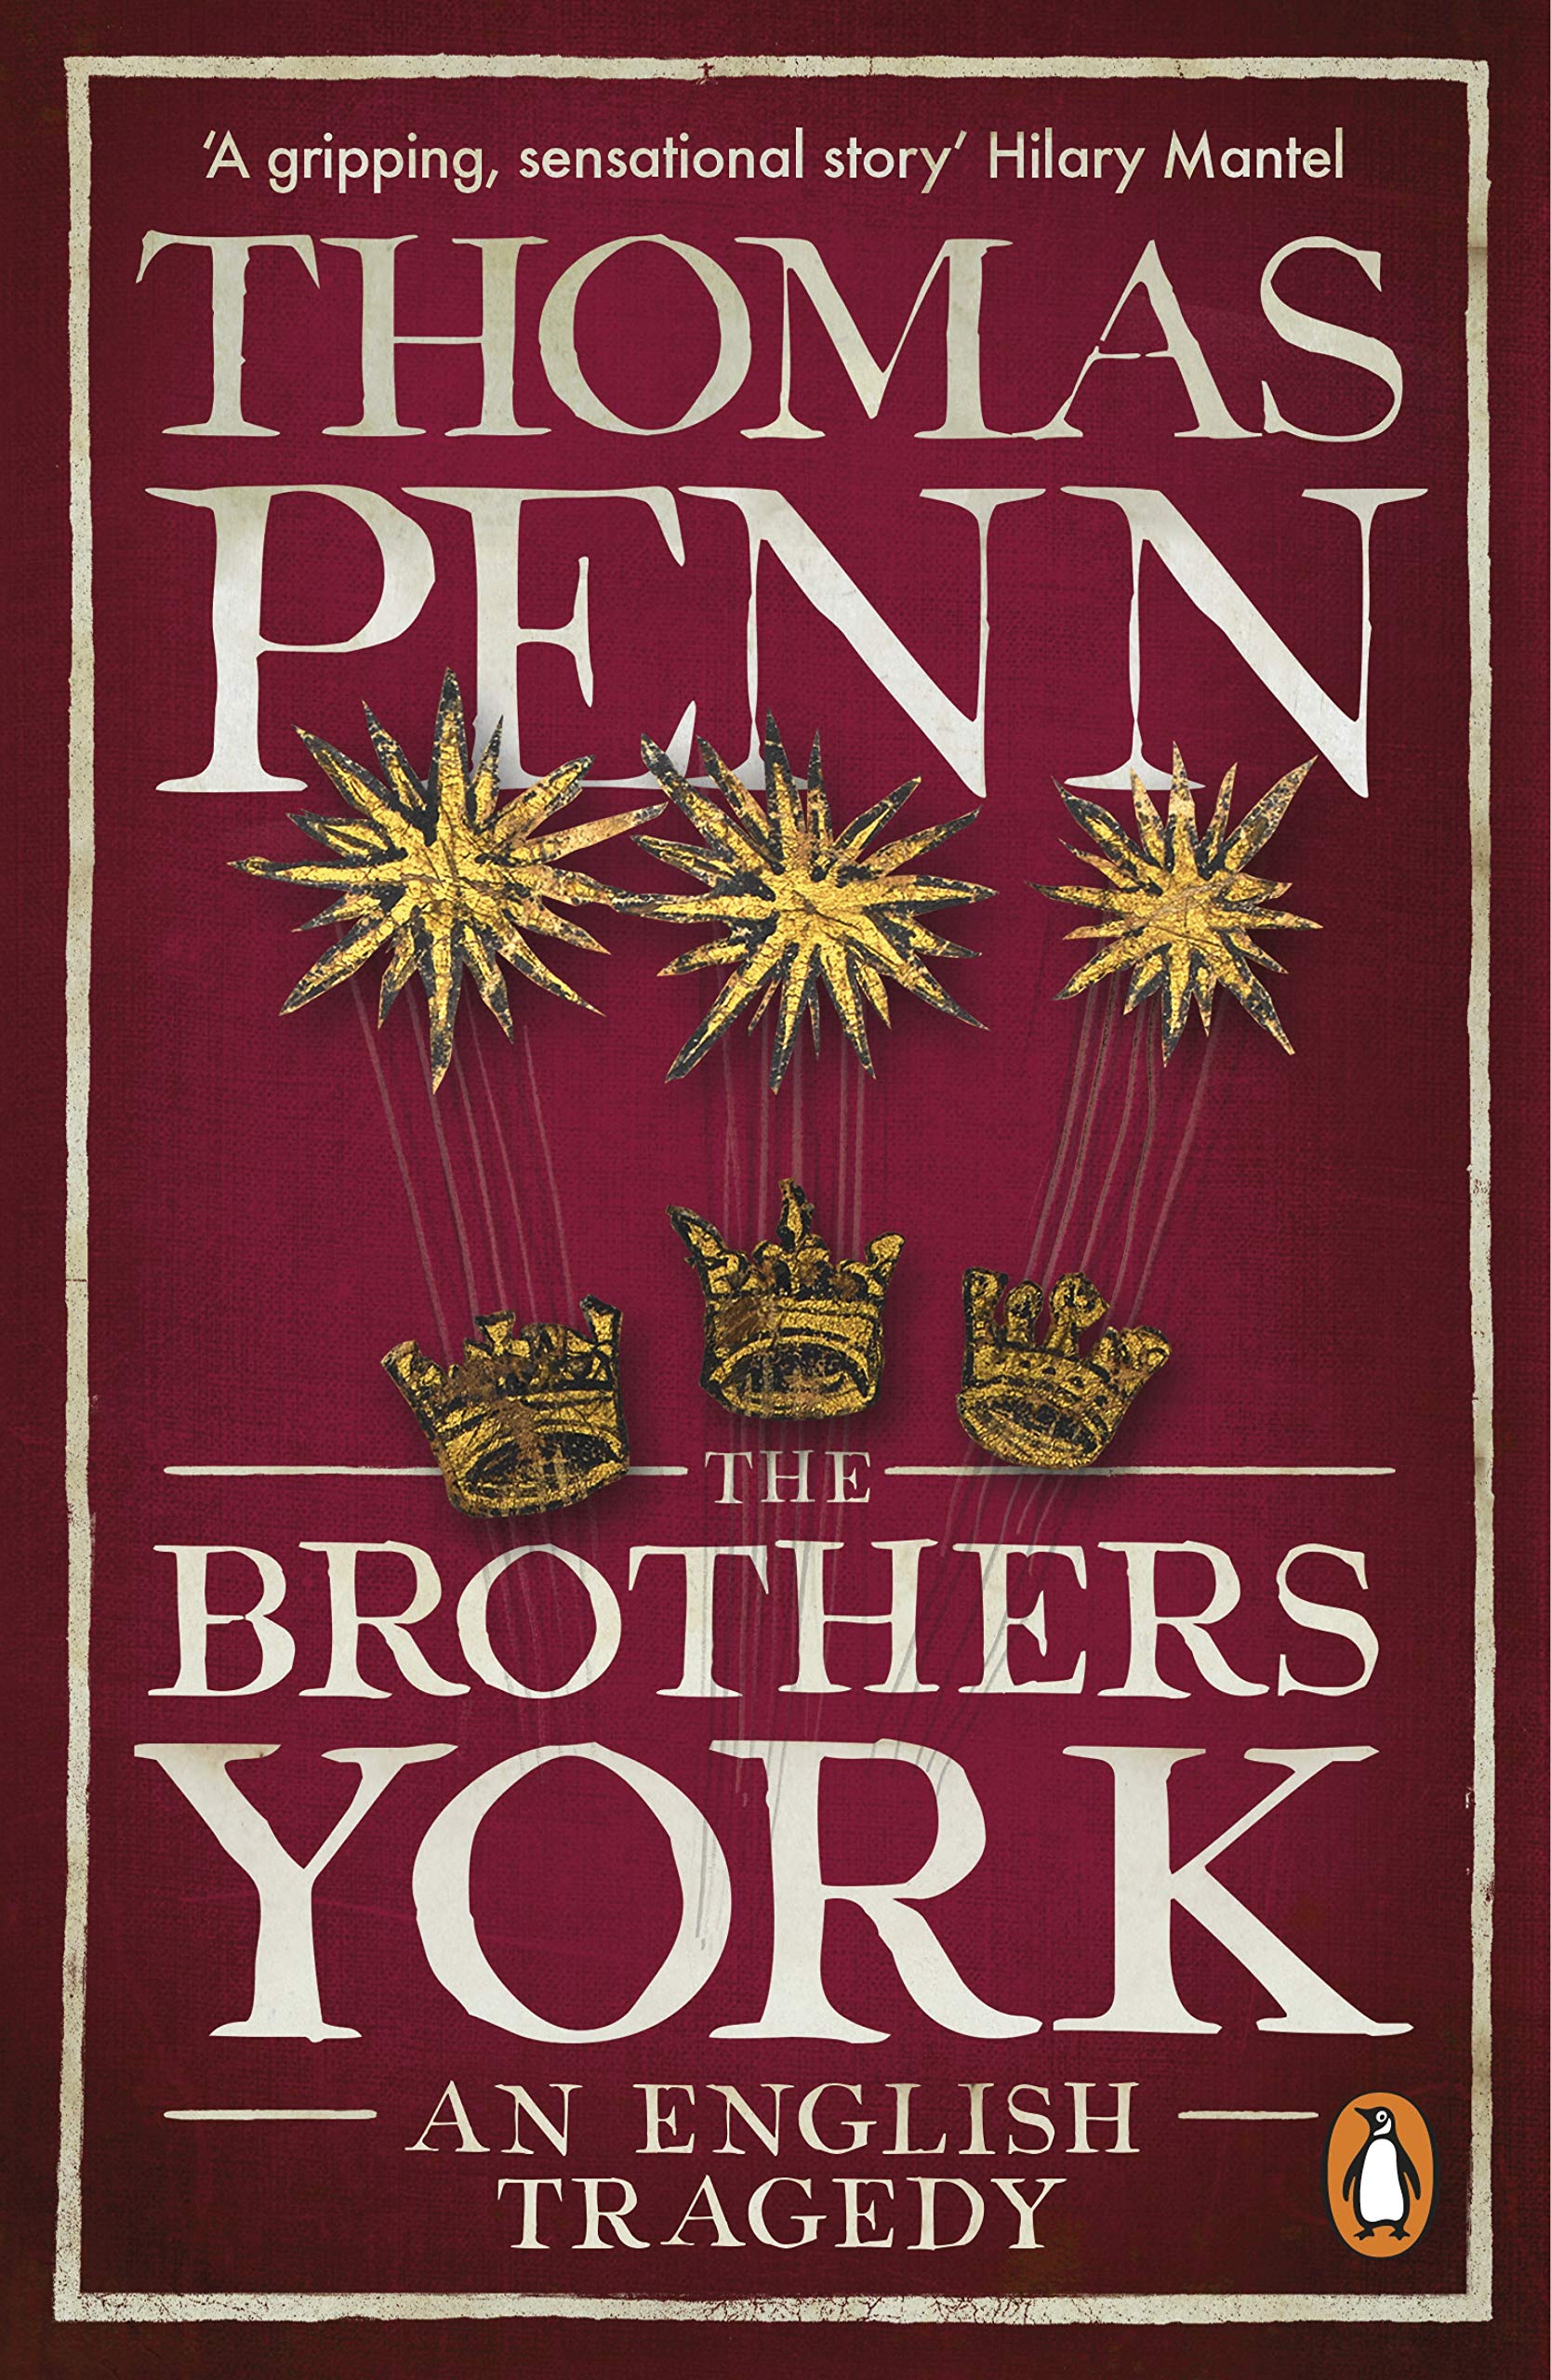 The Brothers York | Thomas Penn